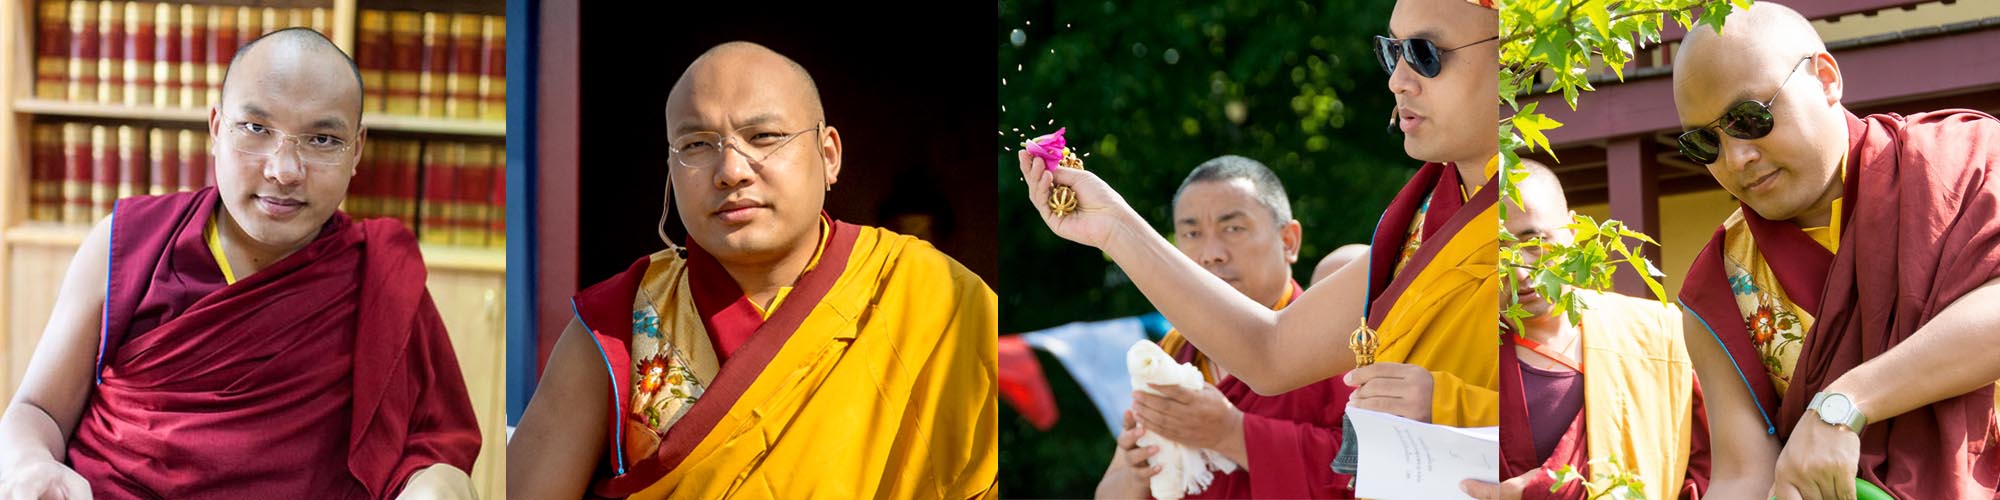 H.H. 17. Gyalwang Karmapa Ogyen Trinley Dorje zweite Bilderreihe